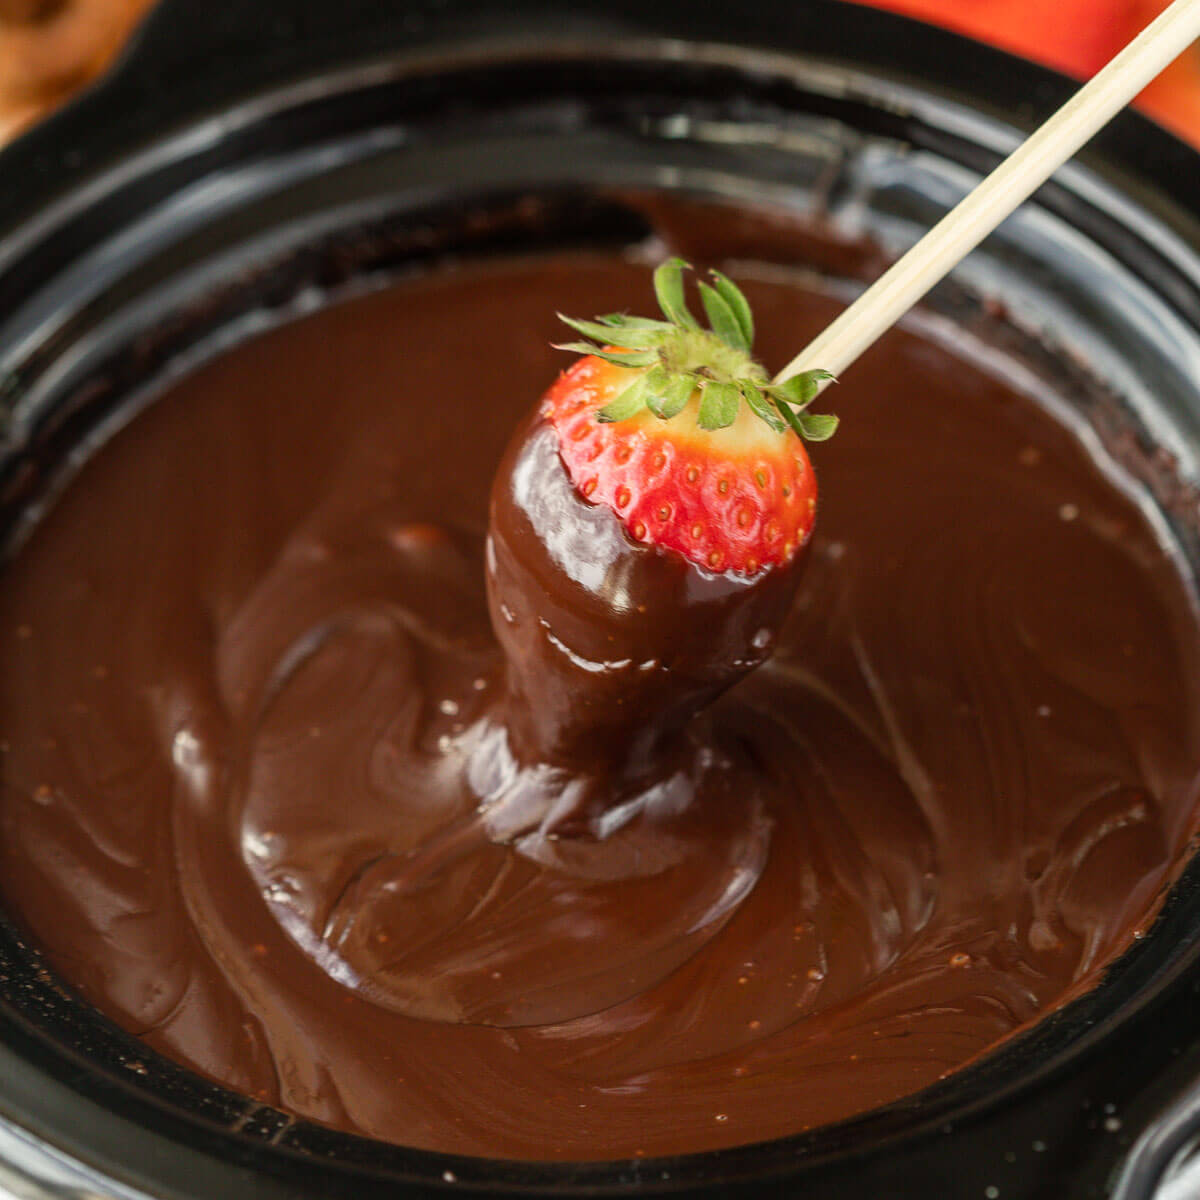 https://www.eatingonadime.com/wp-content/uploads/2023/03/eod-cp-chocolate-fondue-9-2.jpg